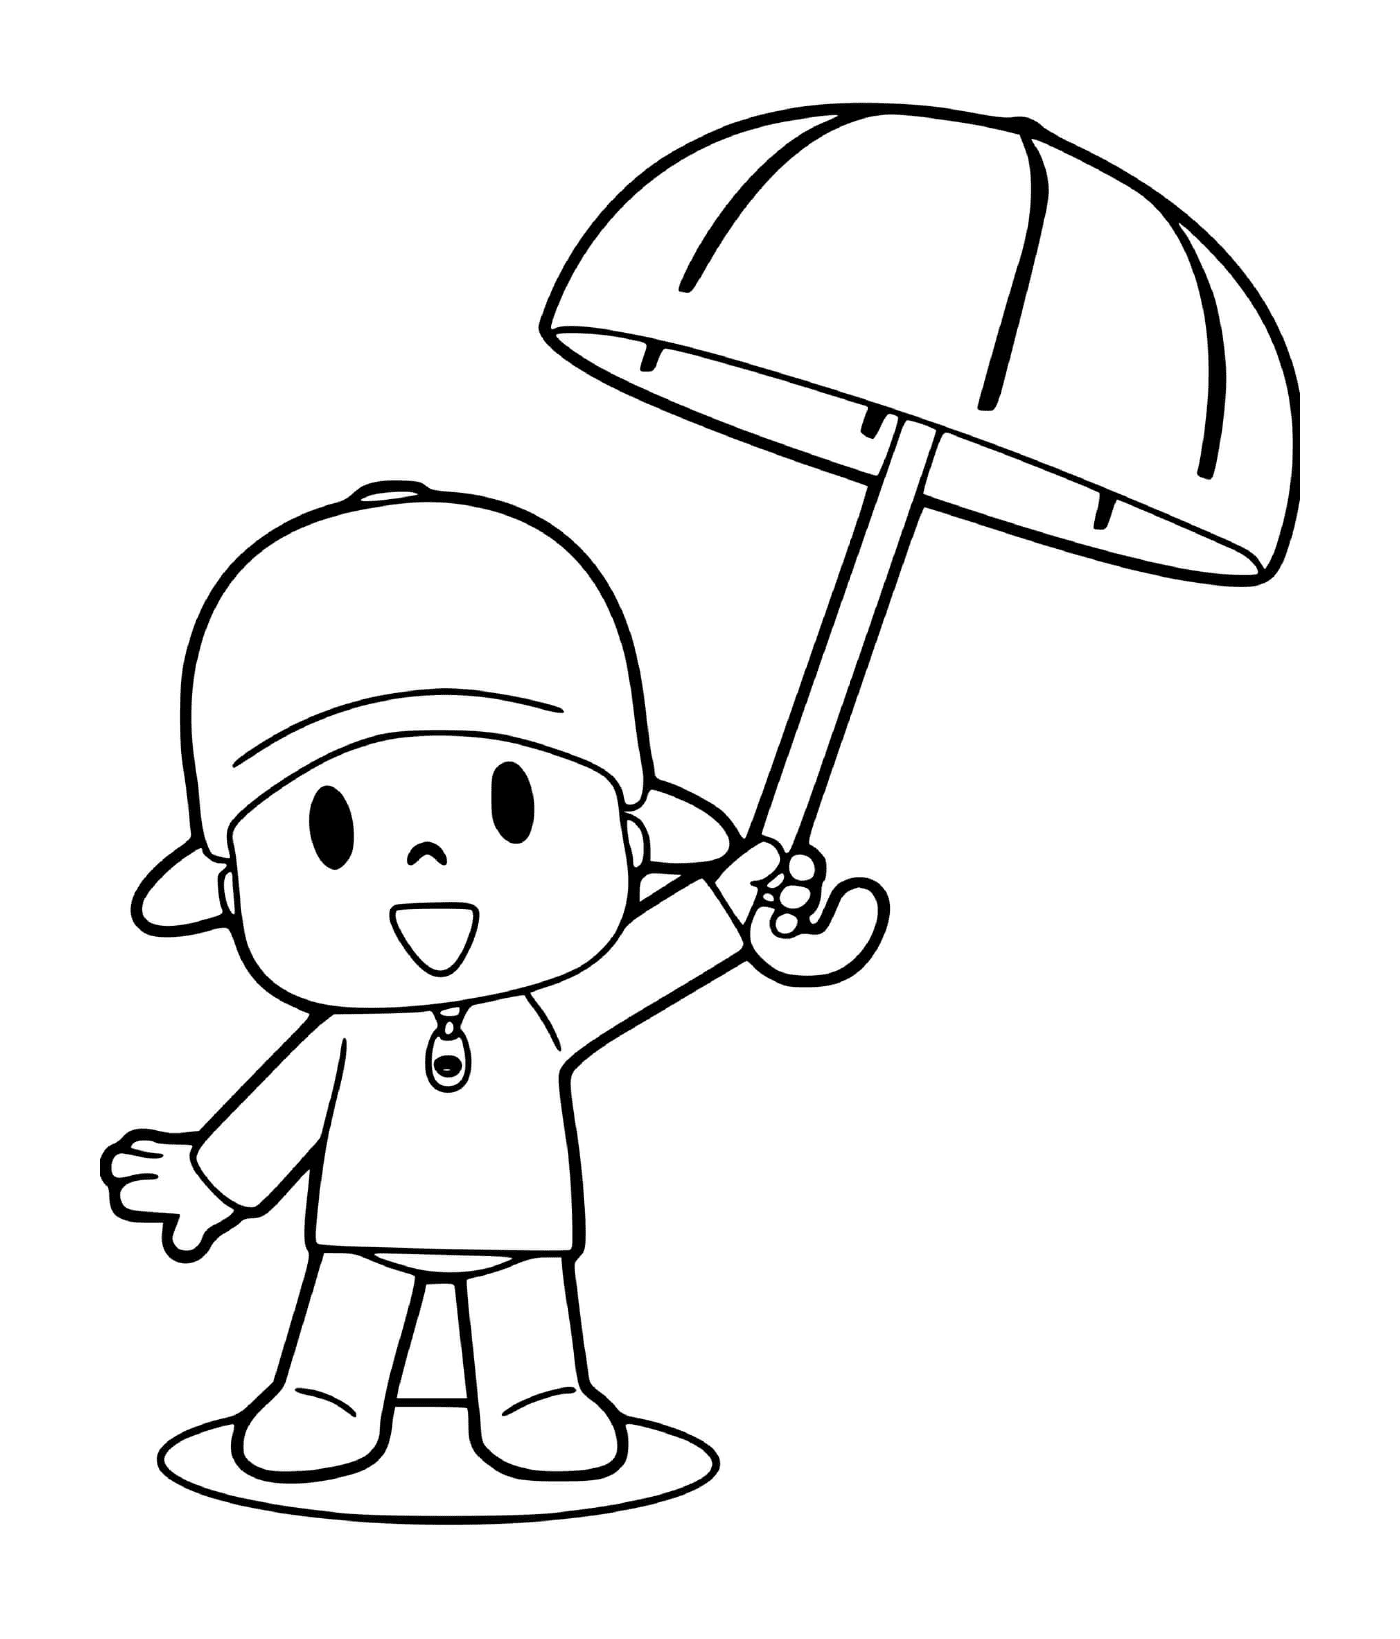  Boy with umbrella 